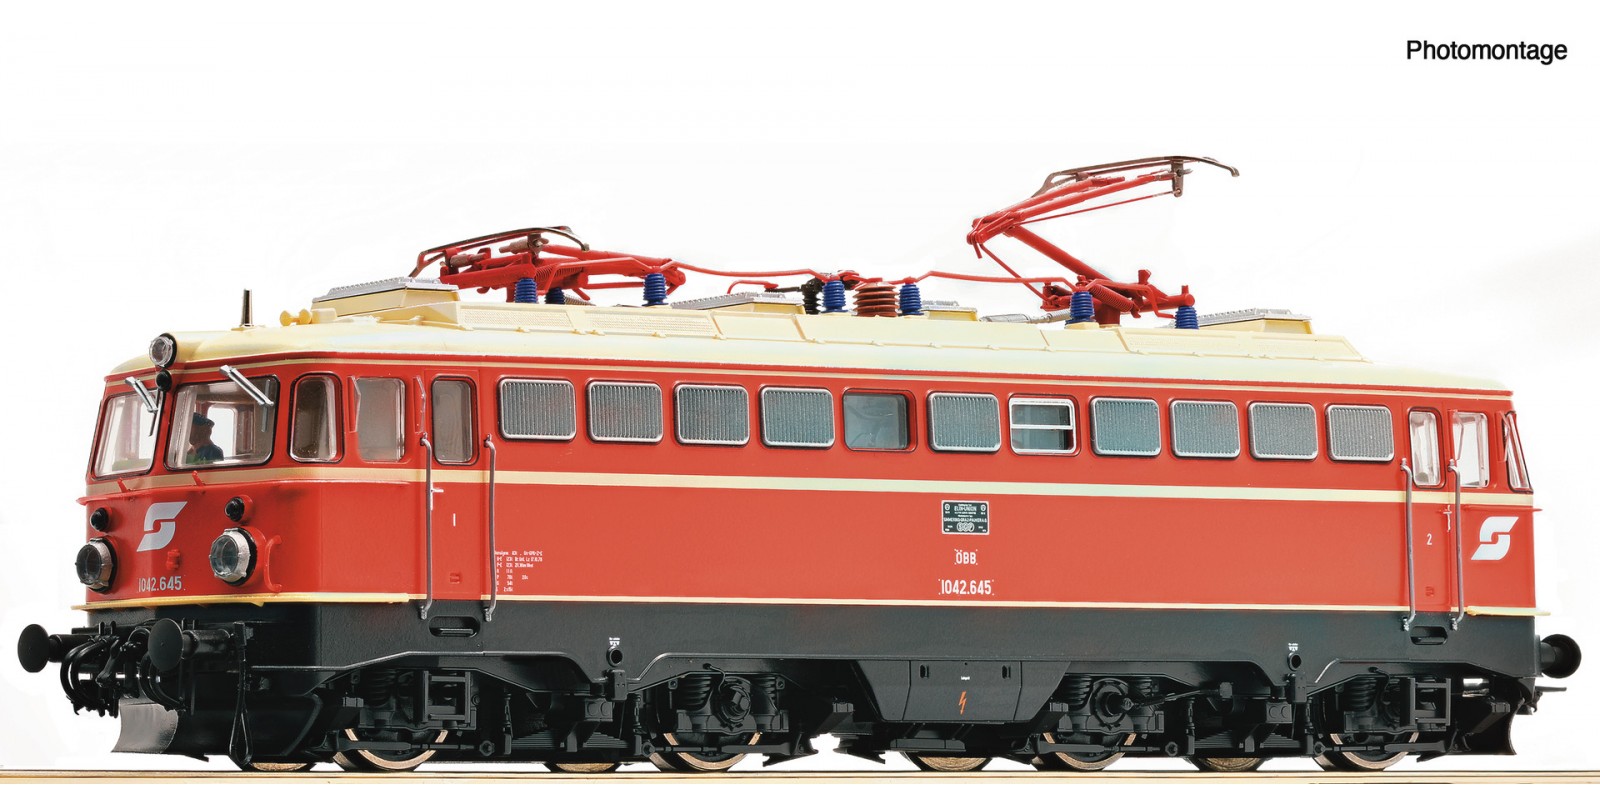 RO7500023 Electric locomotive 1042. 645, ÖBB                 